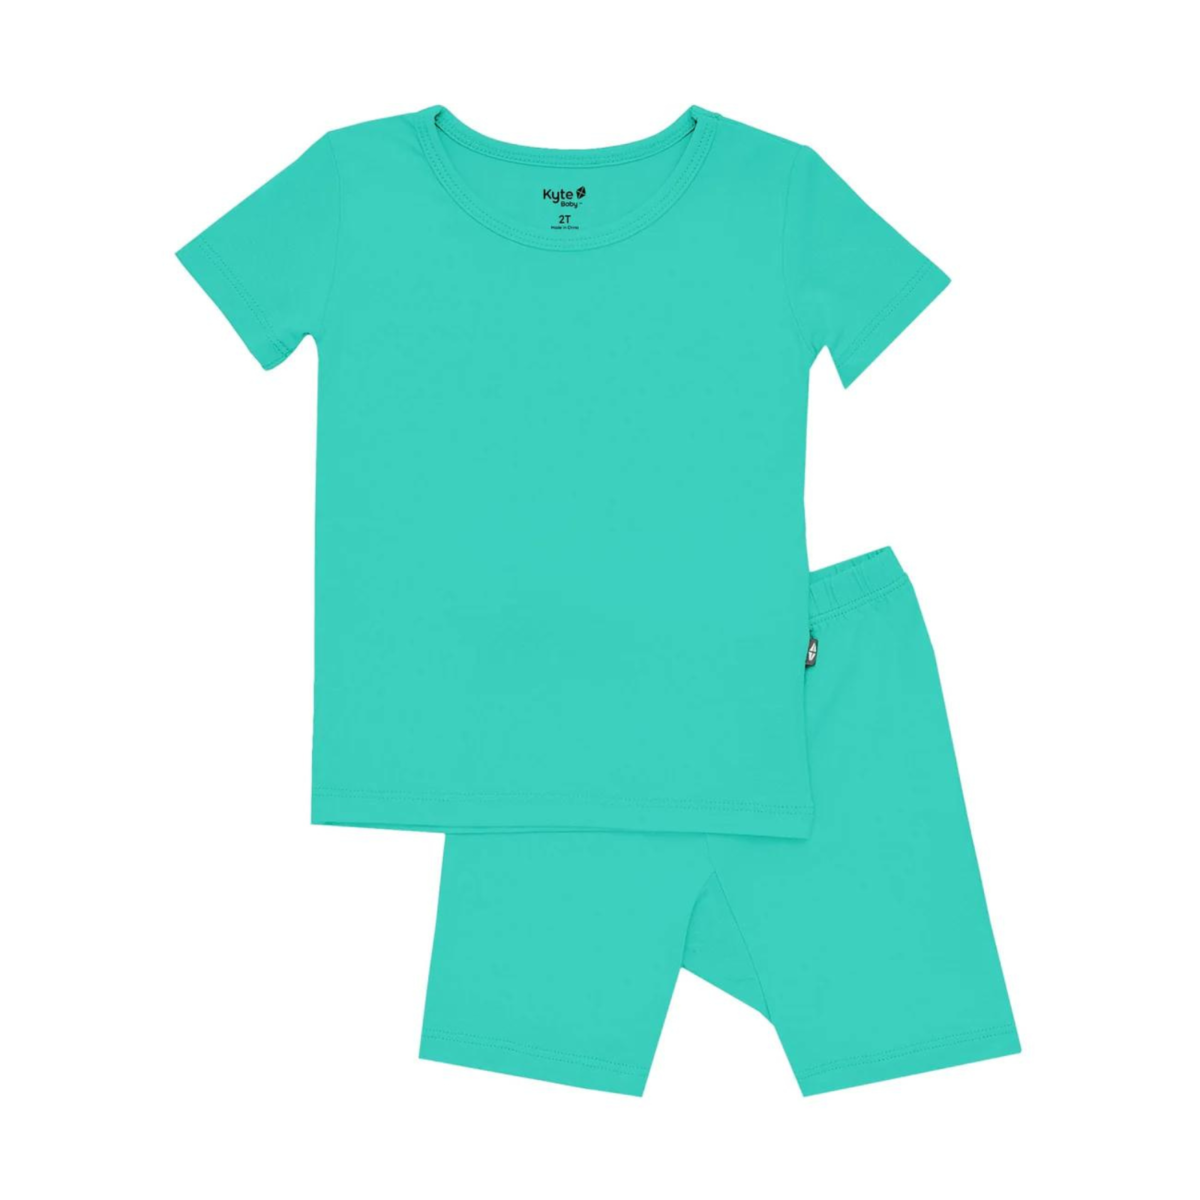 Solid Turquoise Pajama Shorts